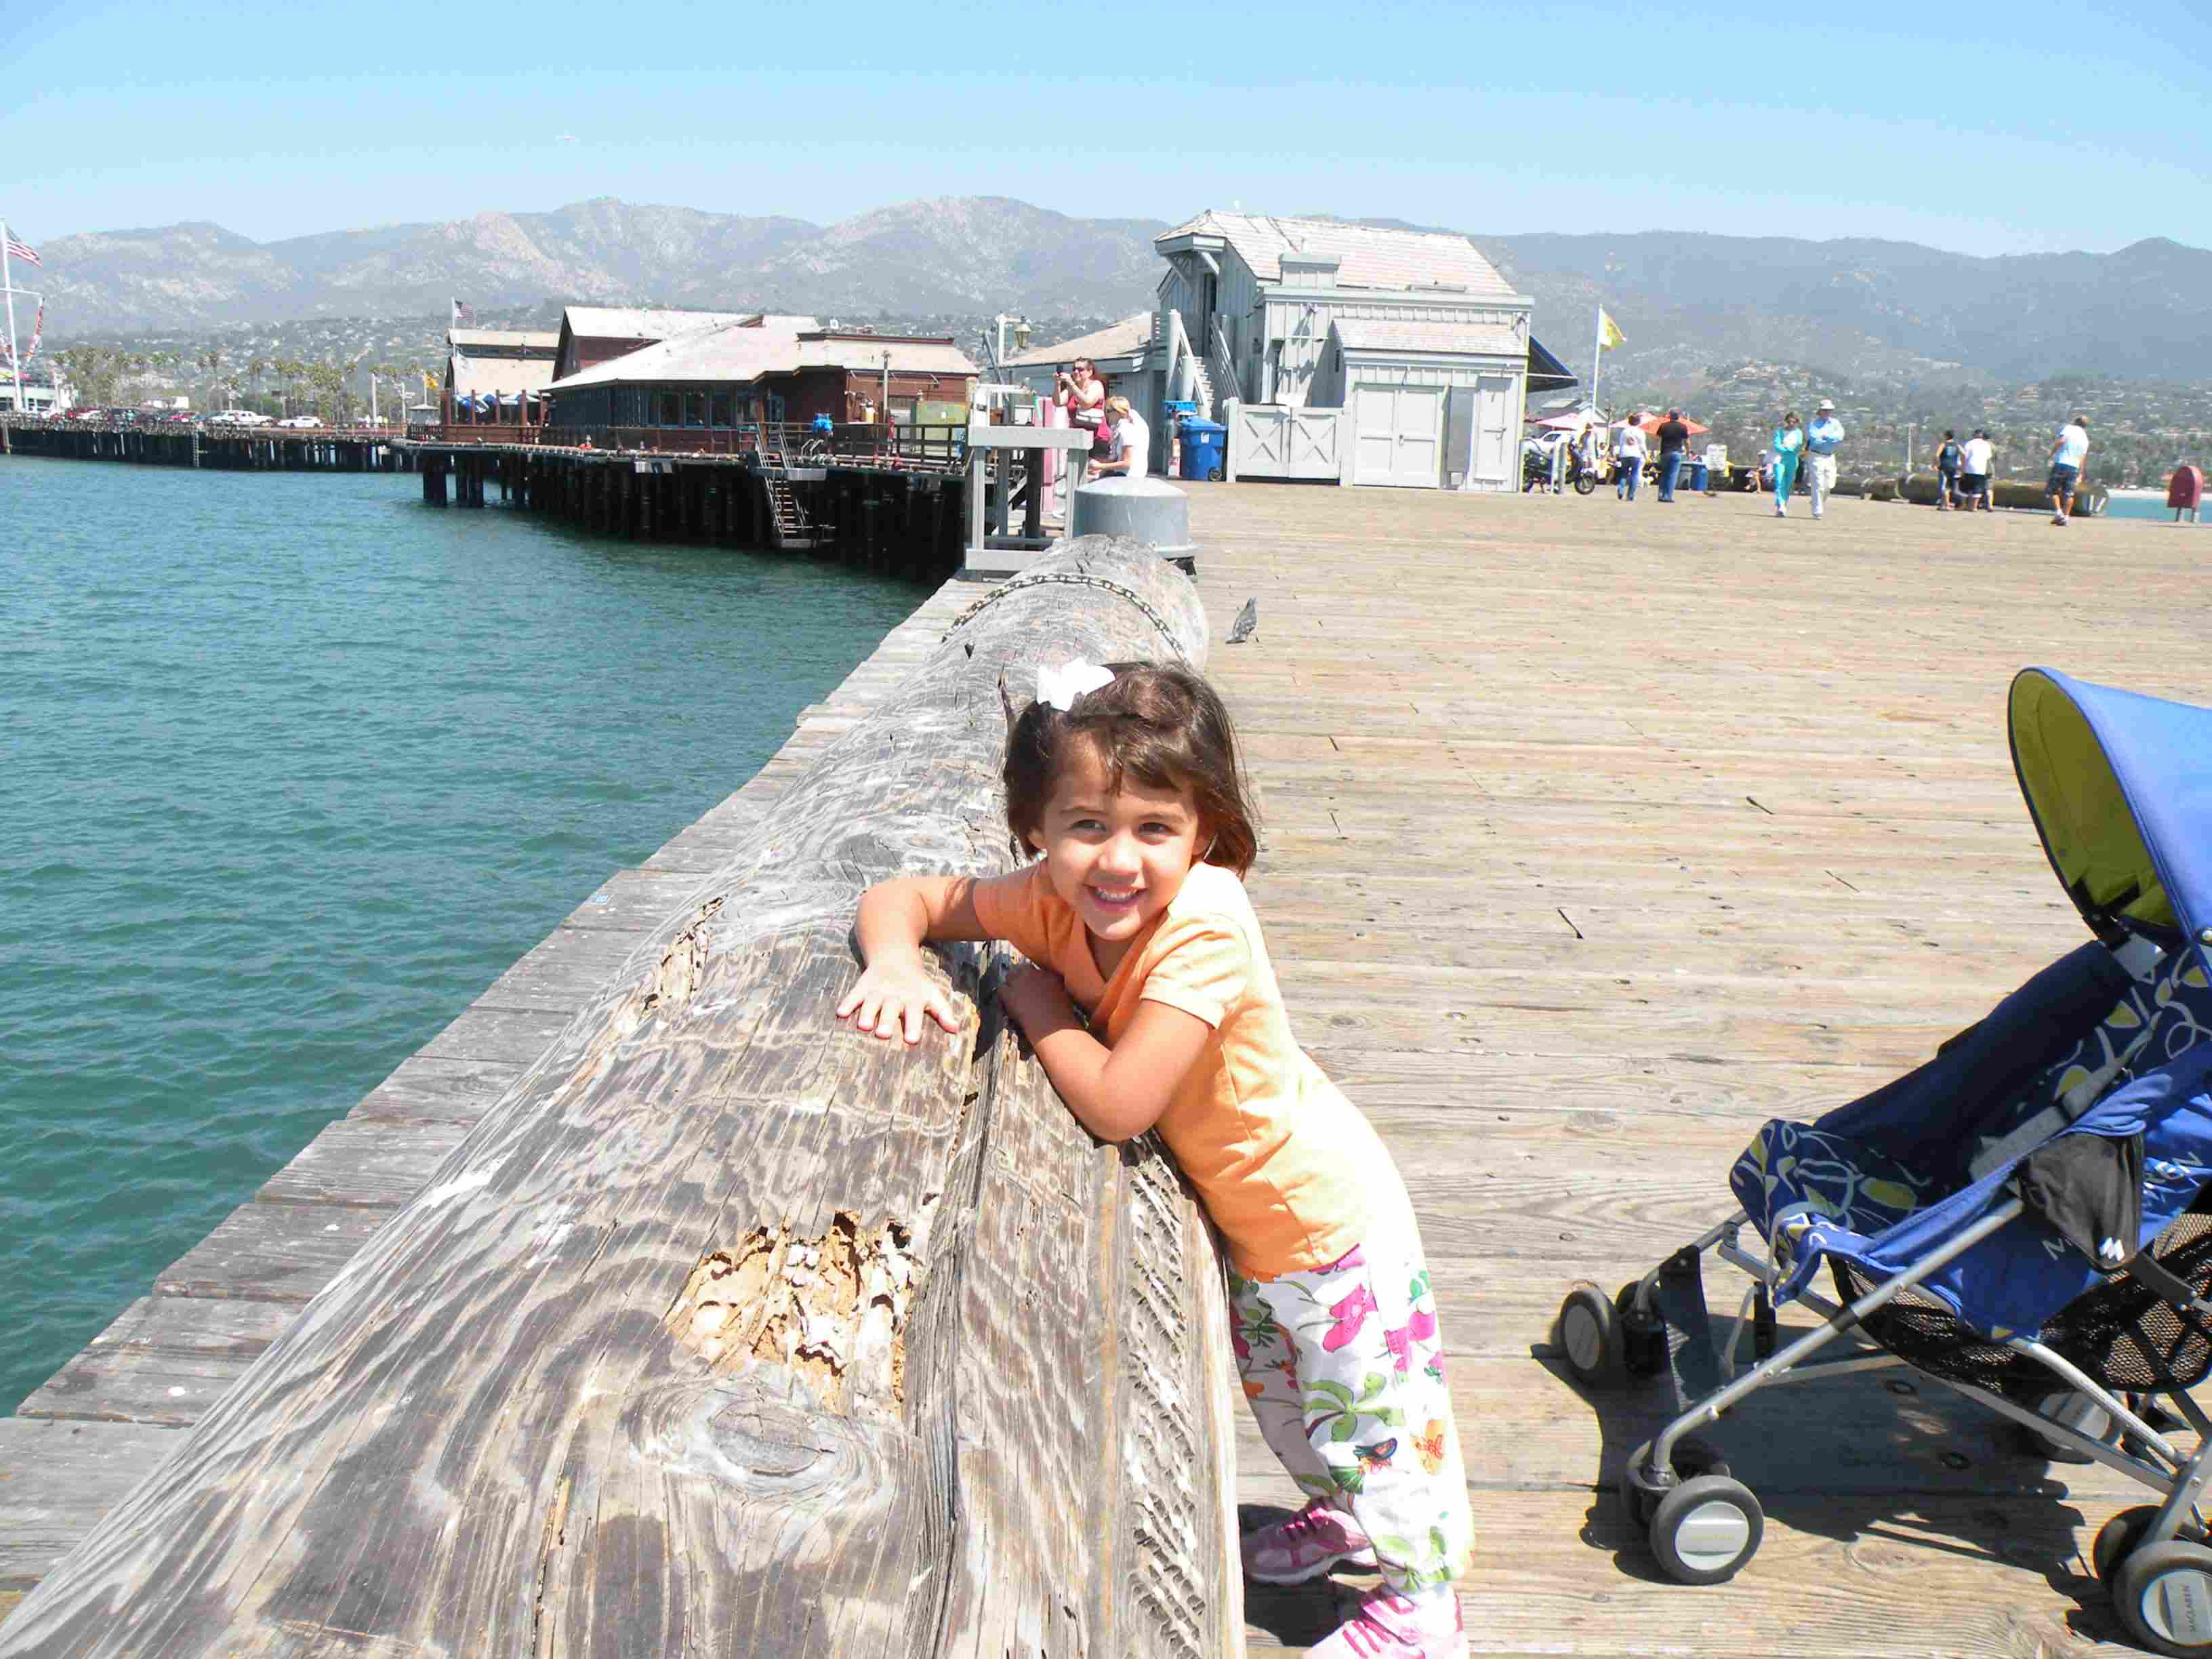 Hope on the pier, 
Santa Barbara, Aug 2012